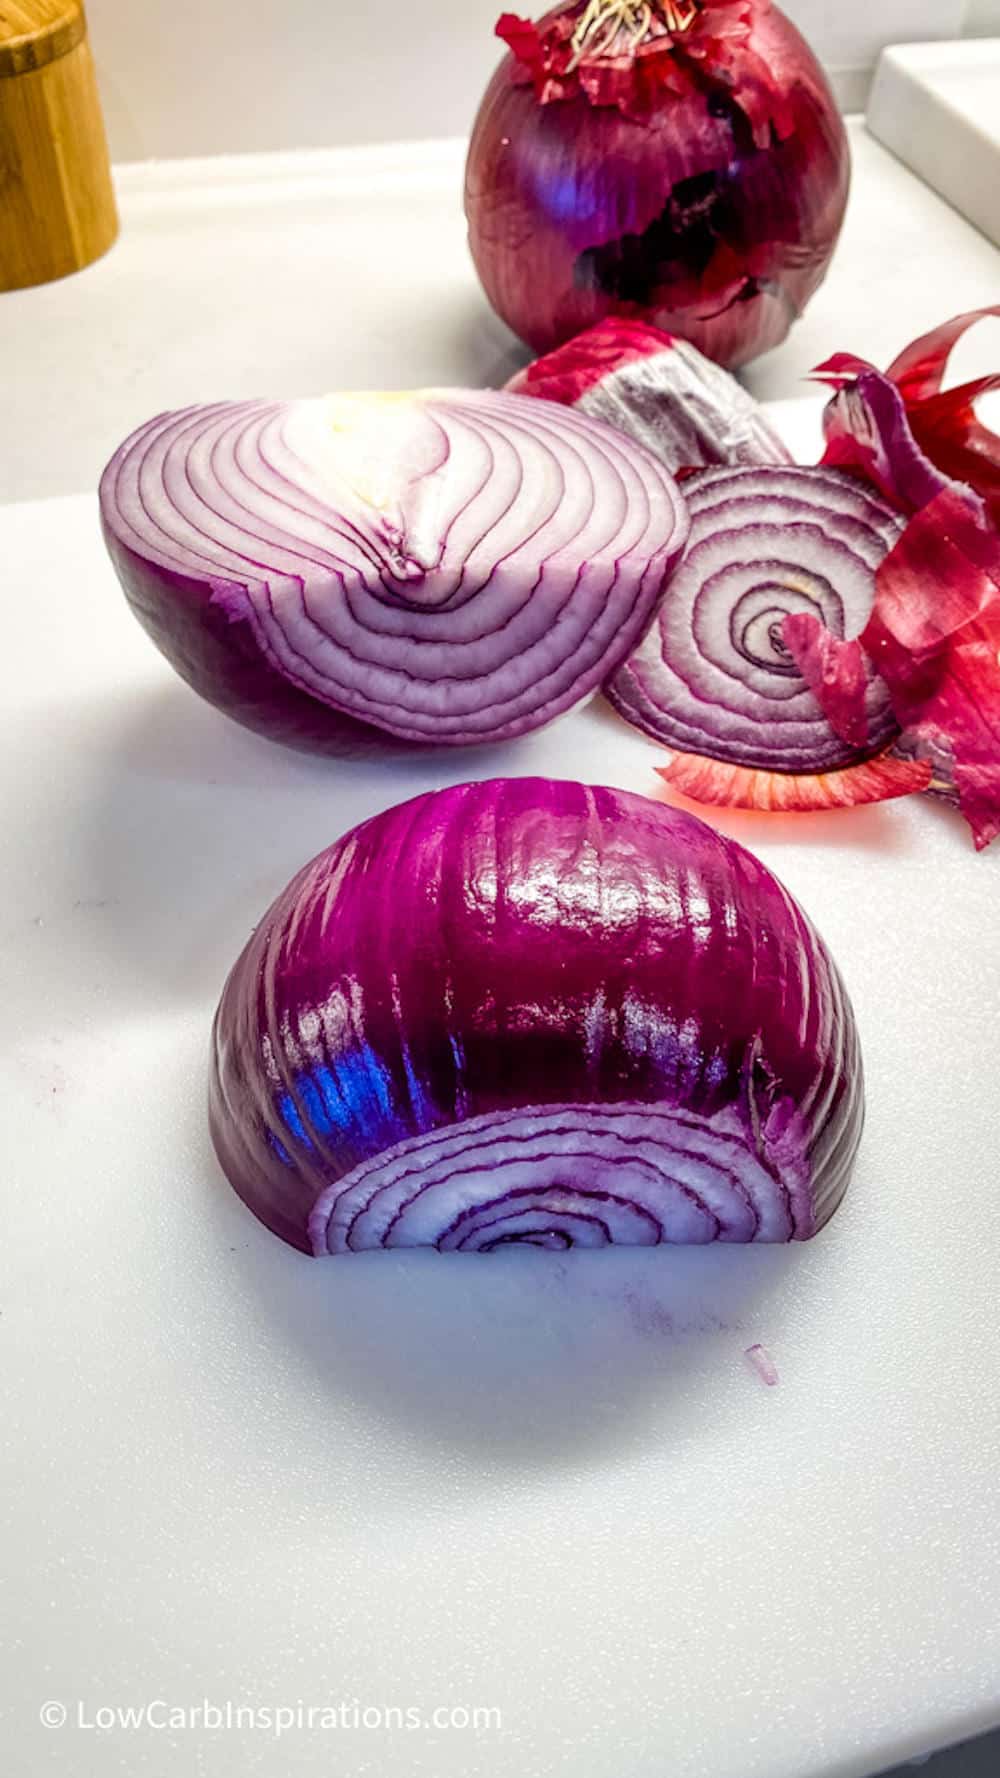 Half of a red onion cut